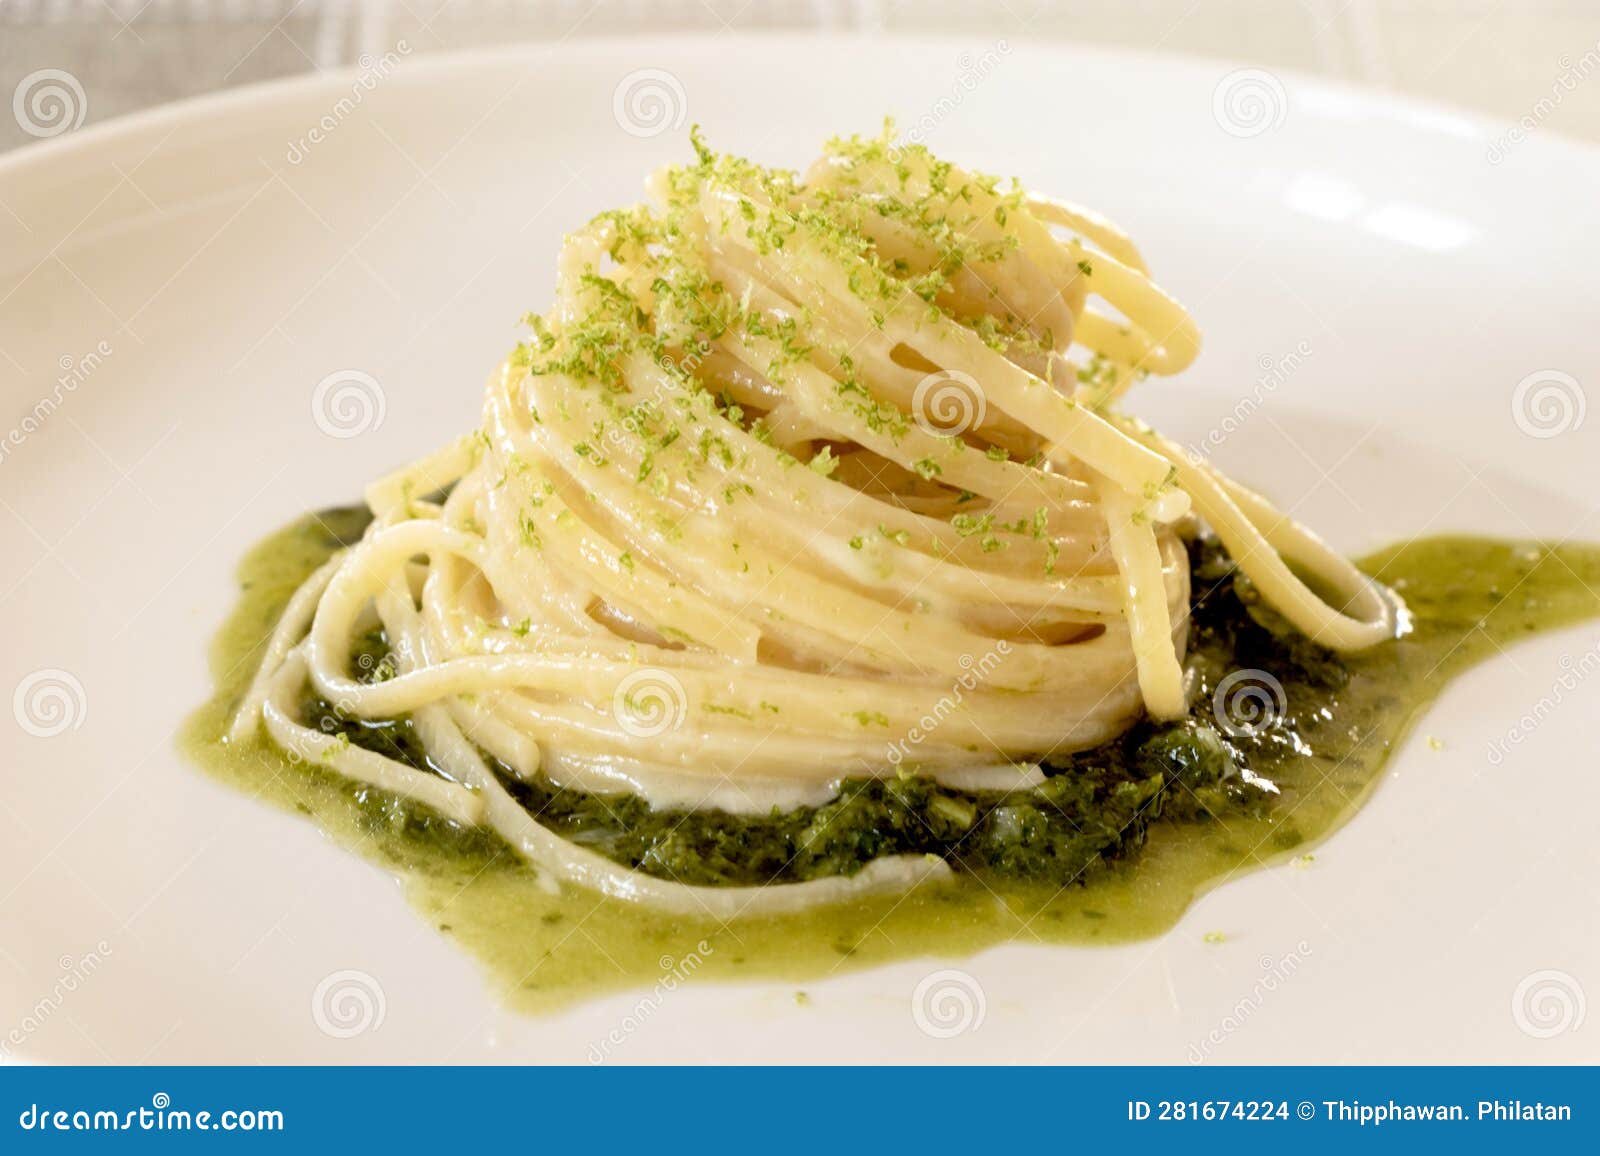 pasta and pesto sauce with herbs cuisine italiane